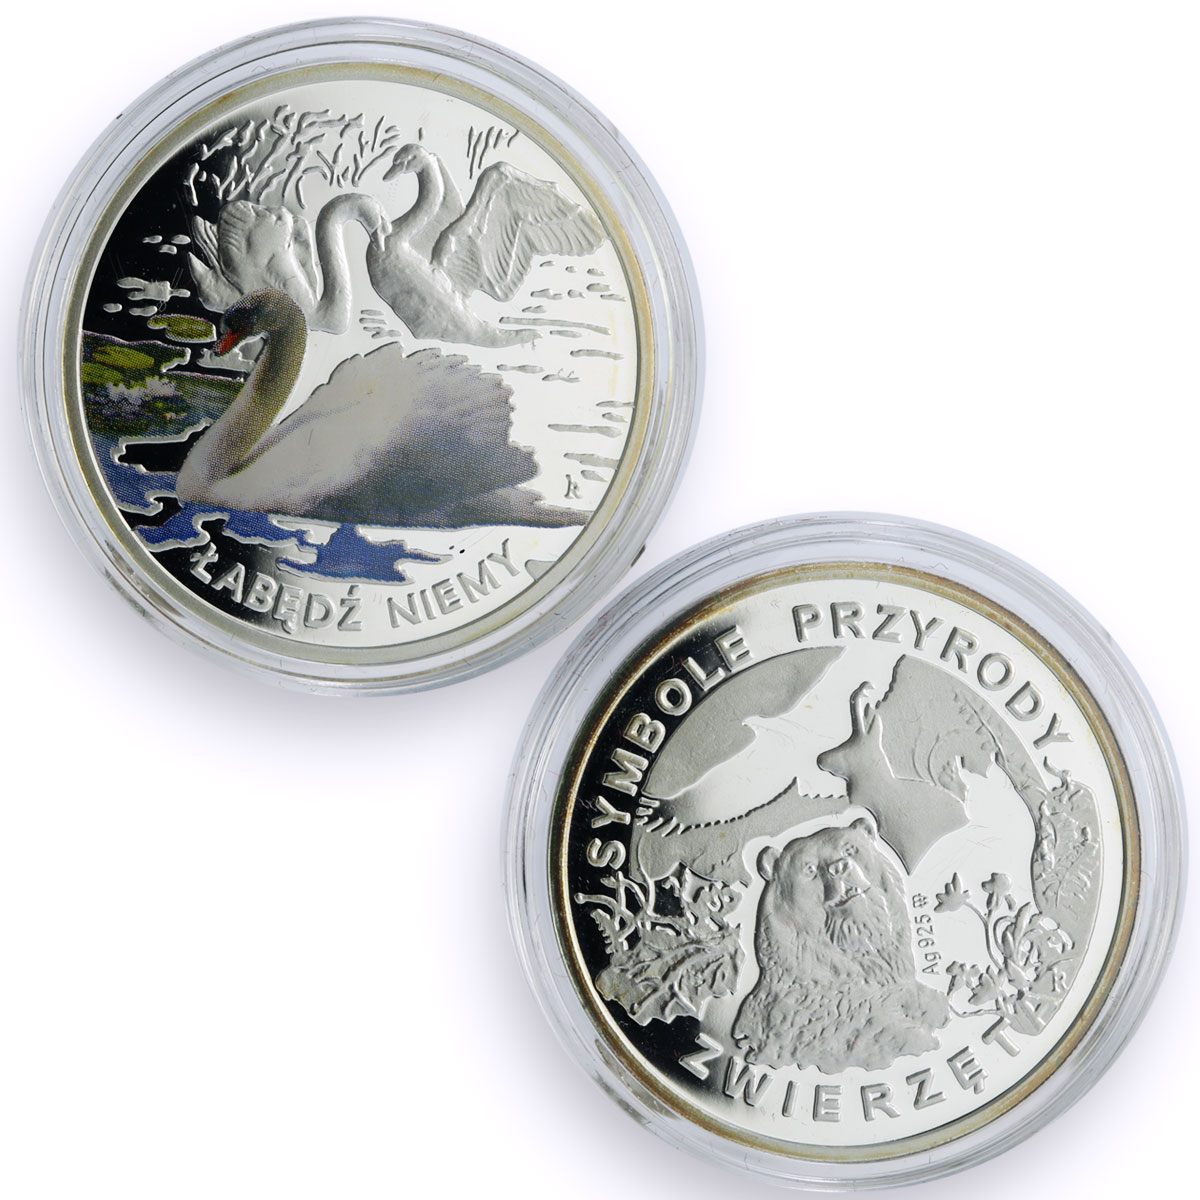 Poland set of 11 medals Nature Symbols Wildlife Animals Fauna silver medals 2010